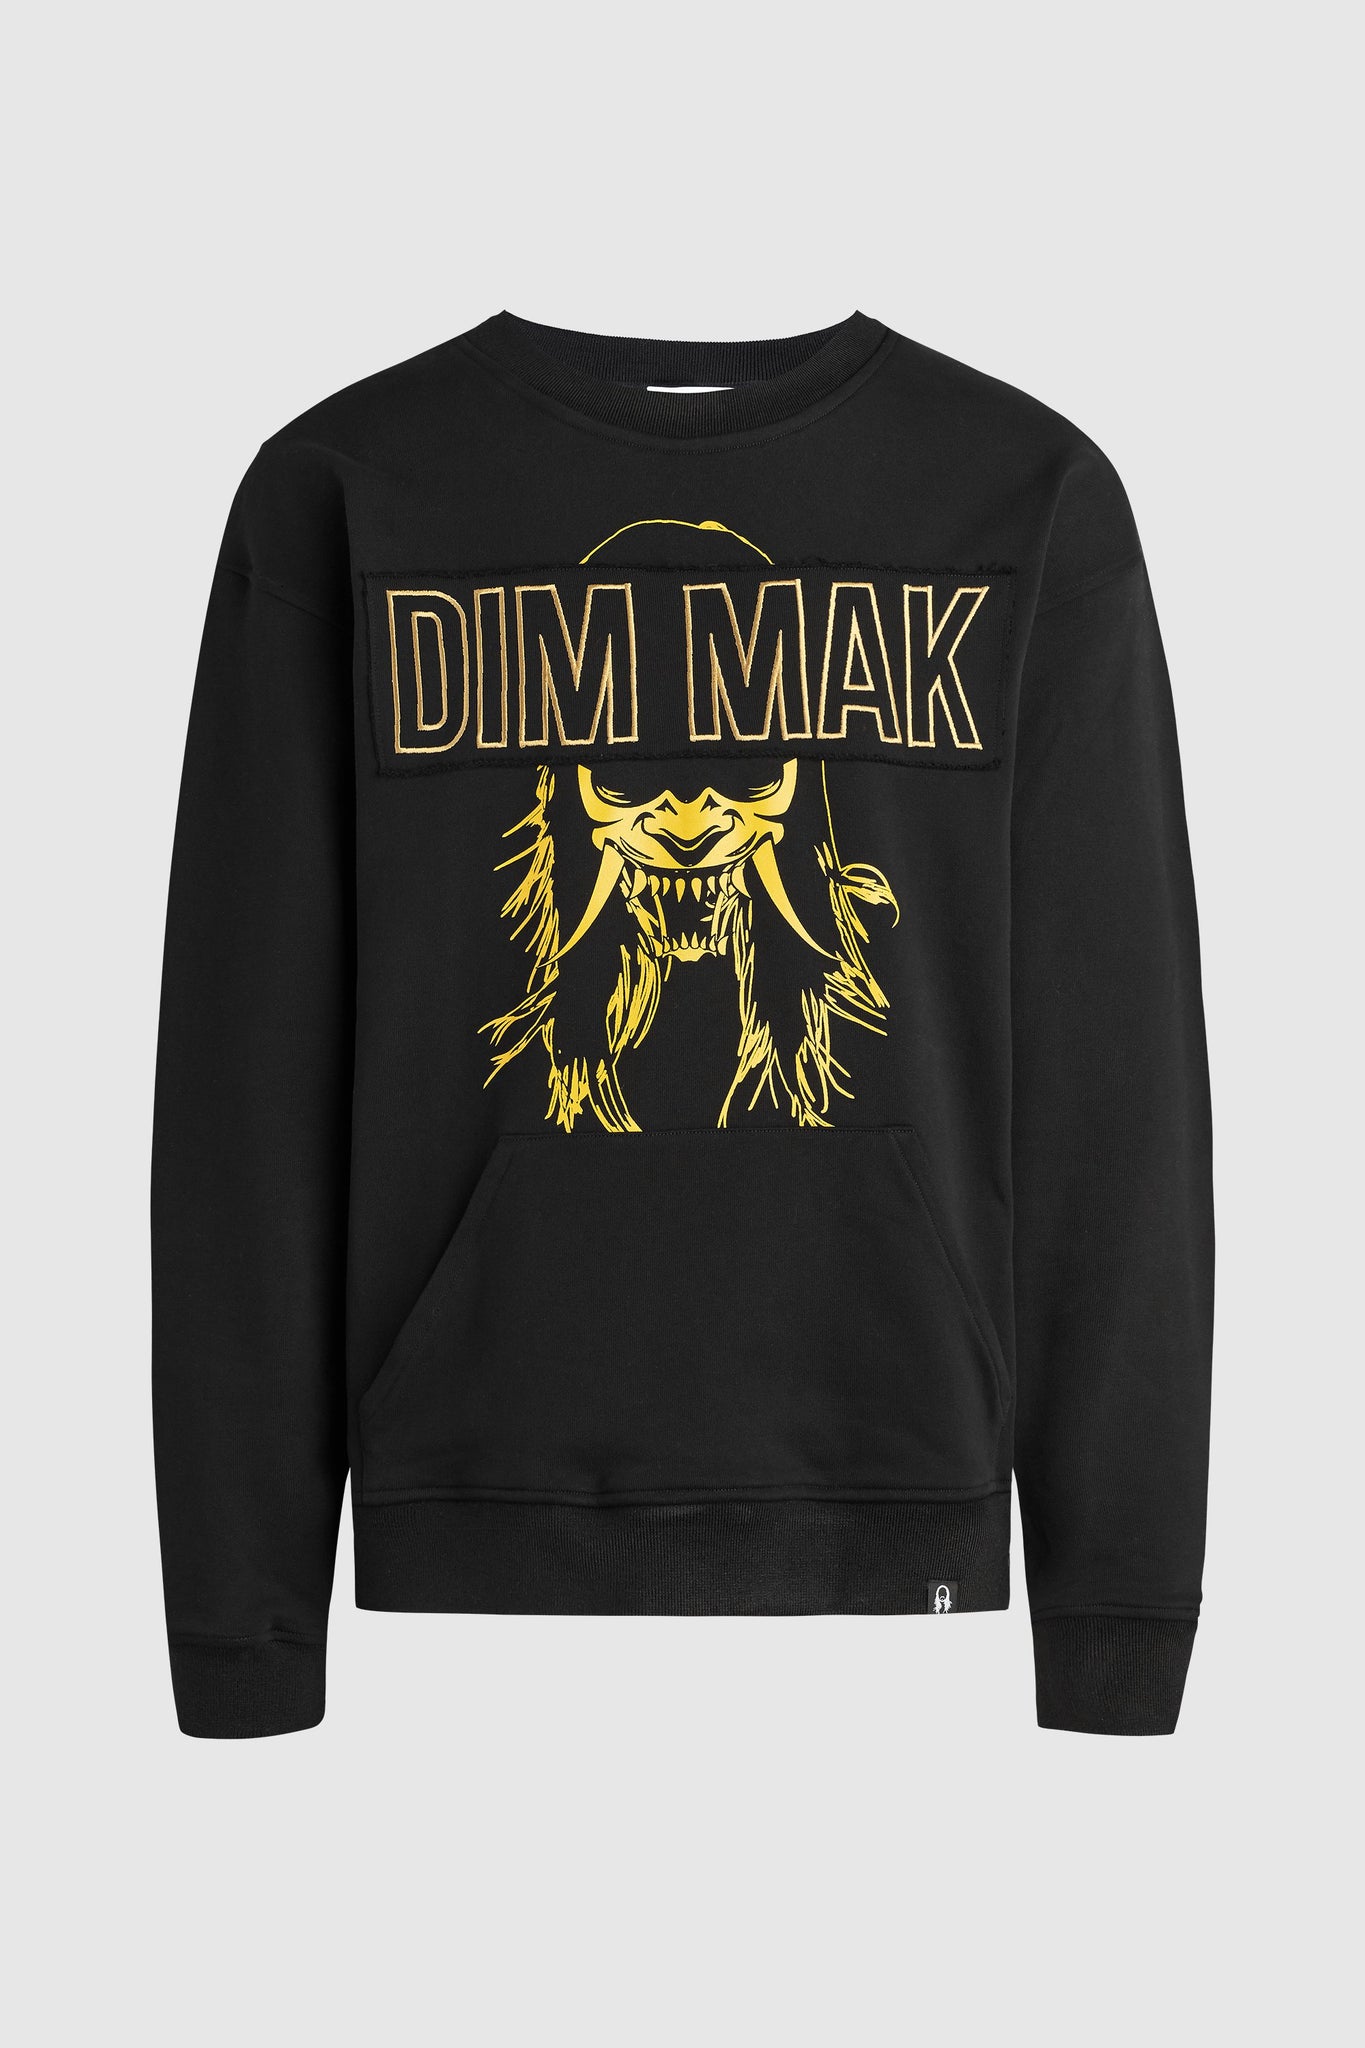 Dim Mak Demon Mask Pullover